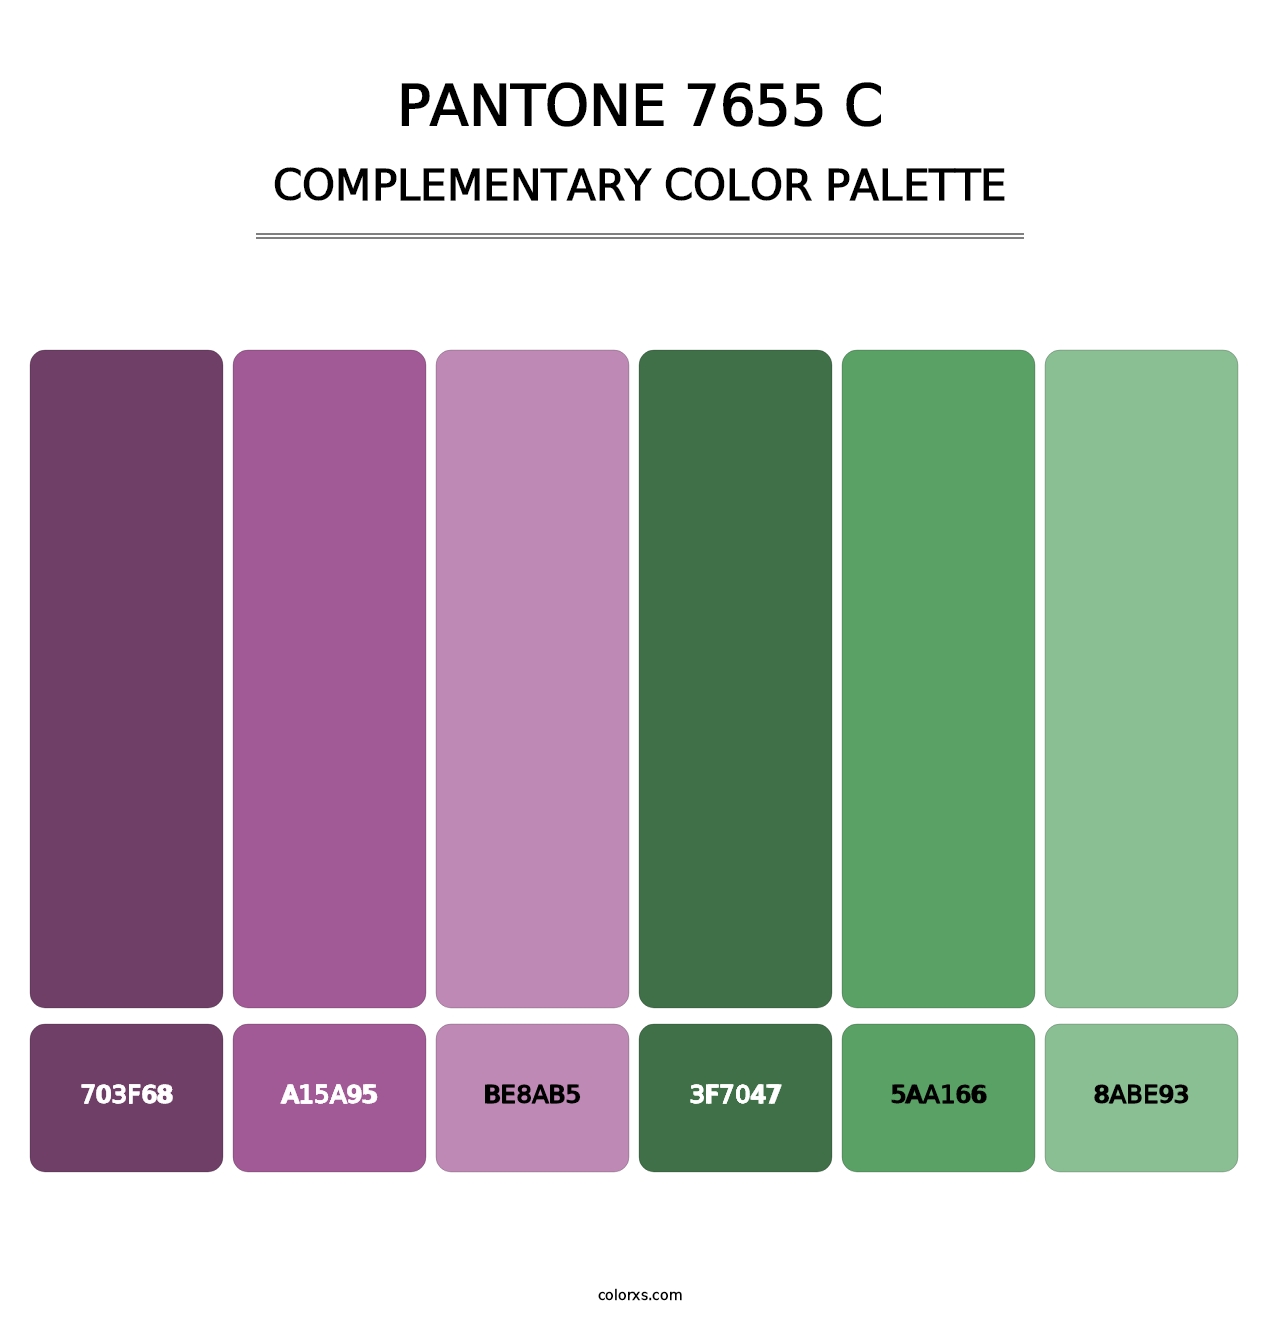 PANTONE 7655 C - Complementary Color Palette